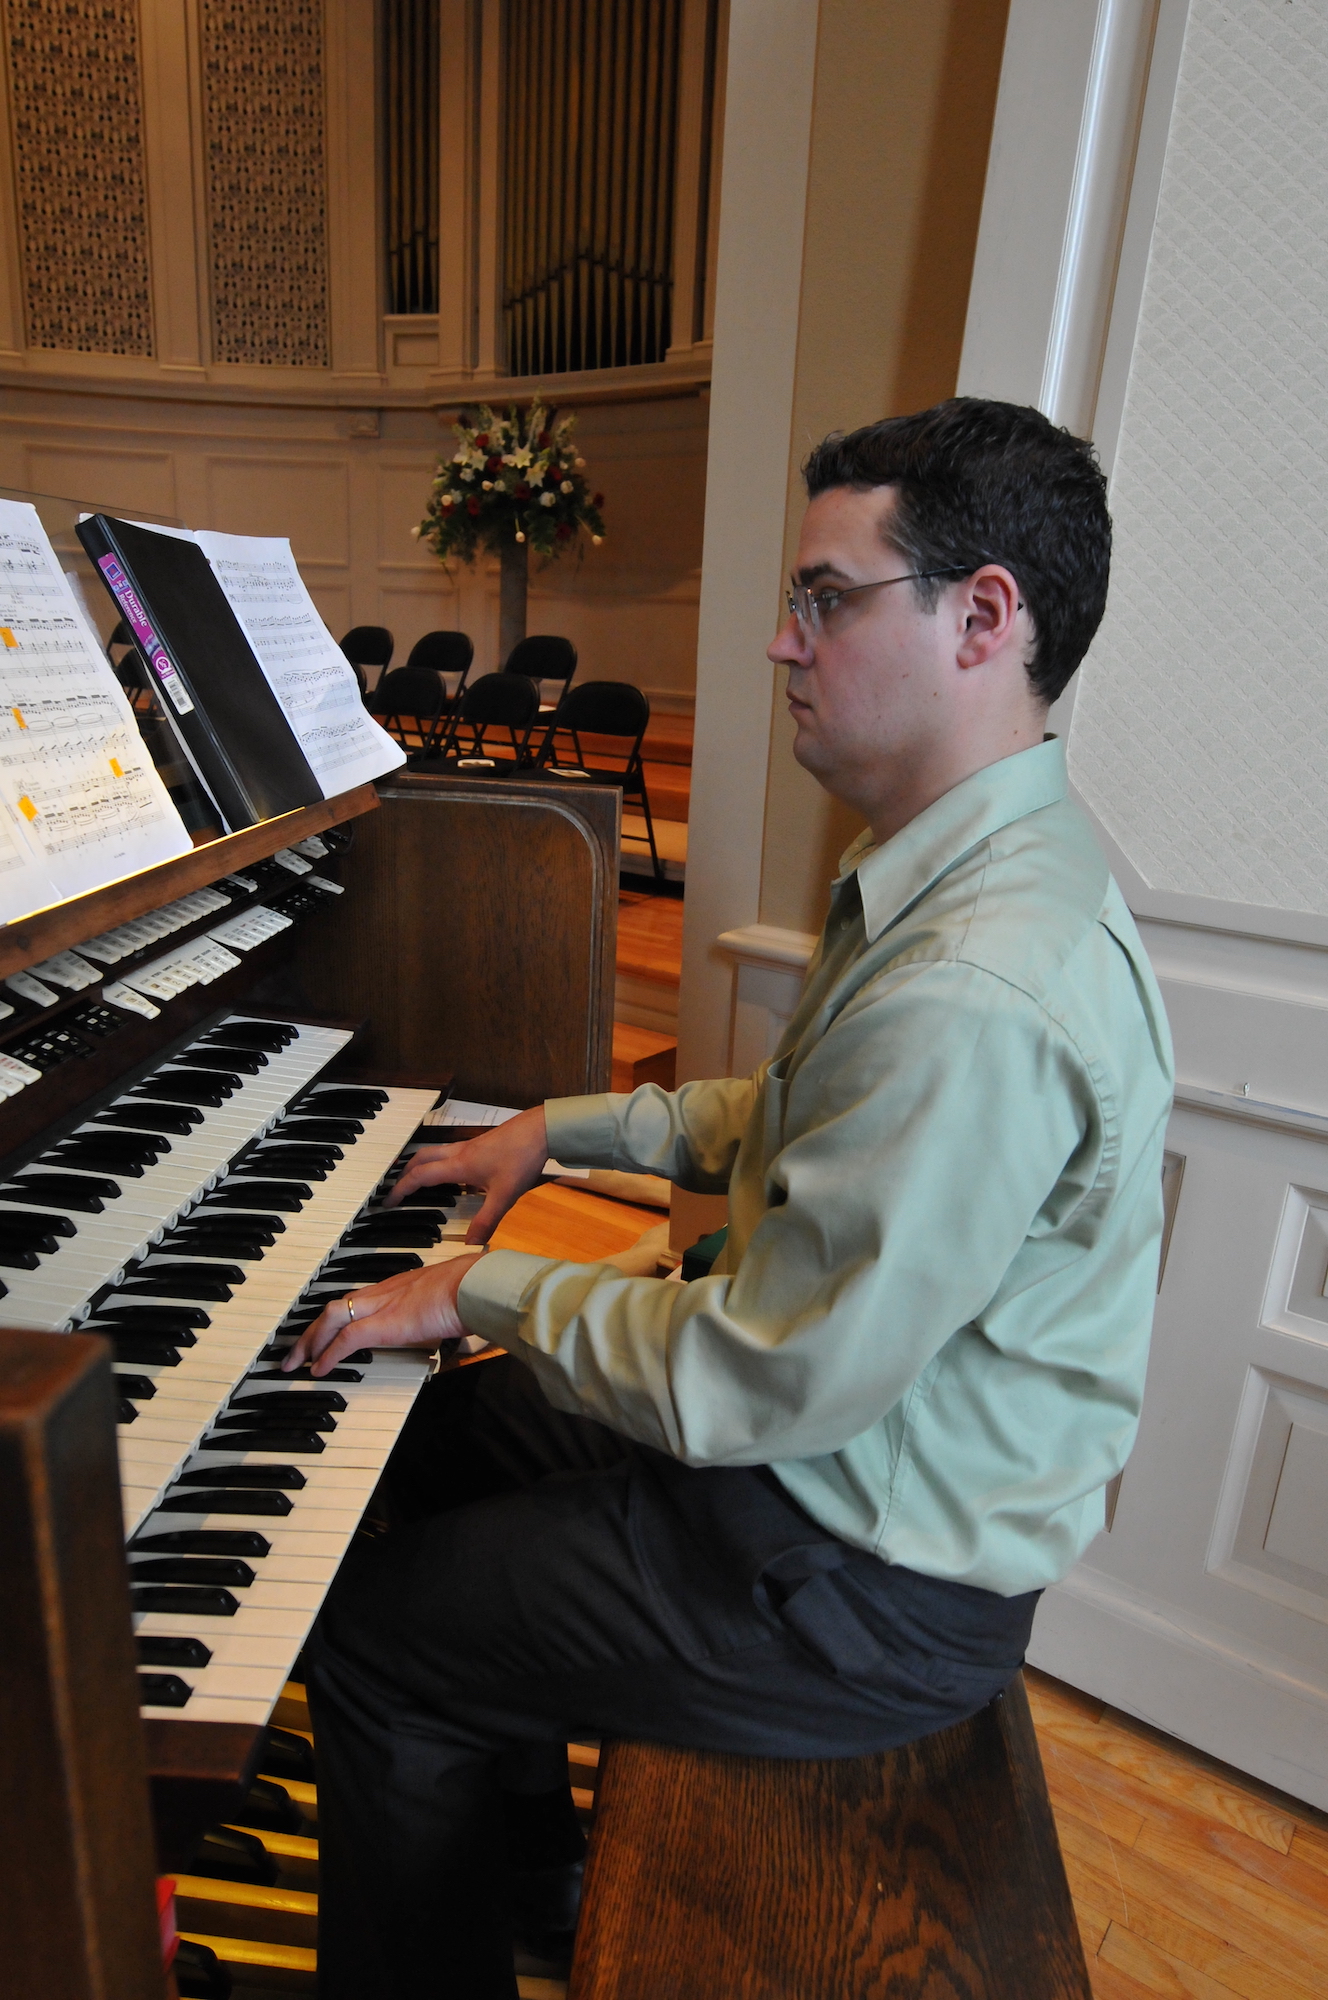 Playing the Swasey Chapel organ